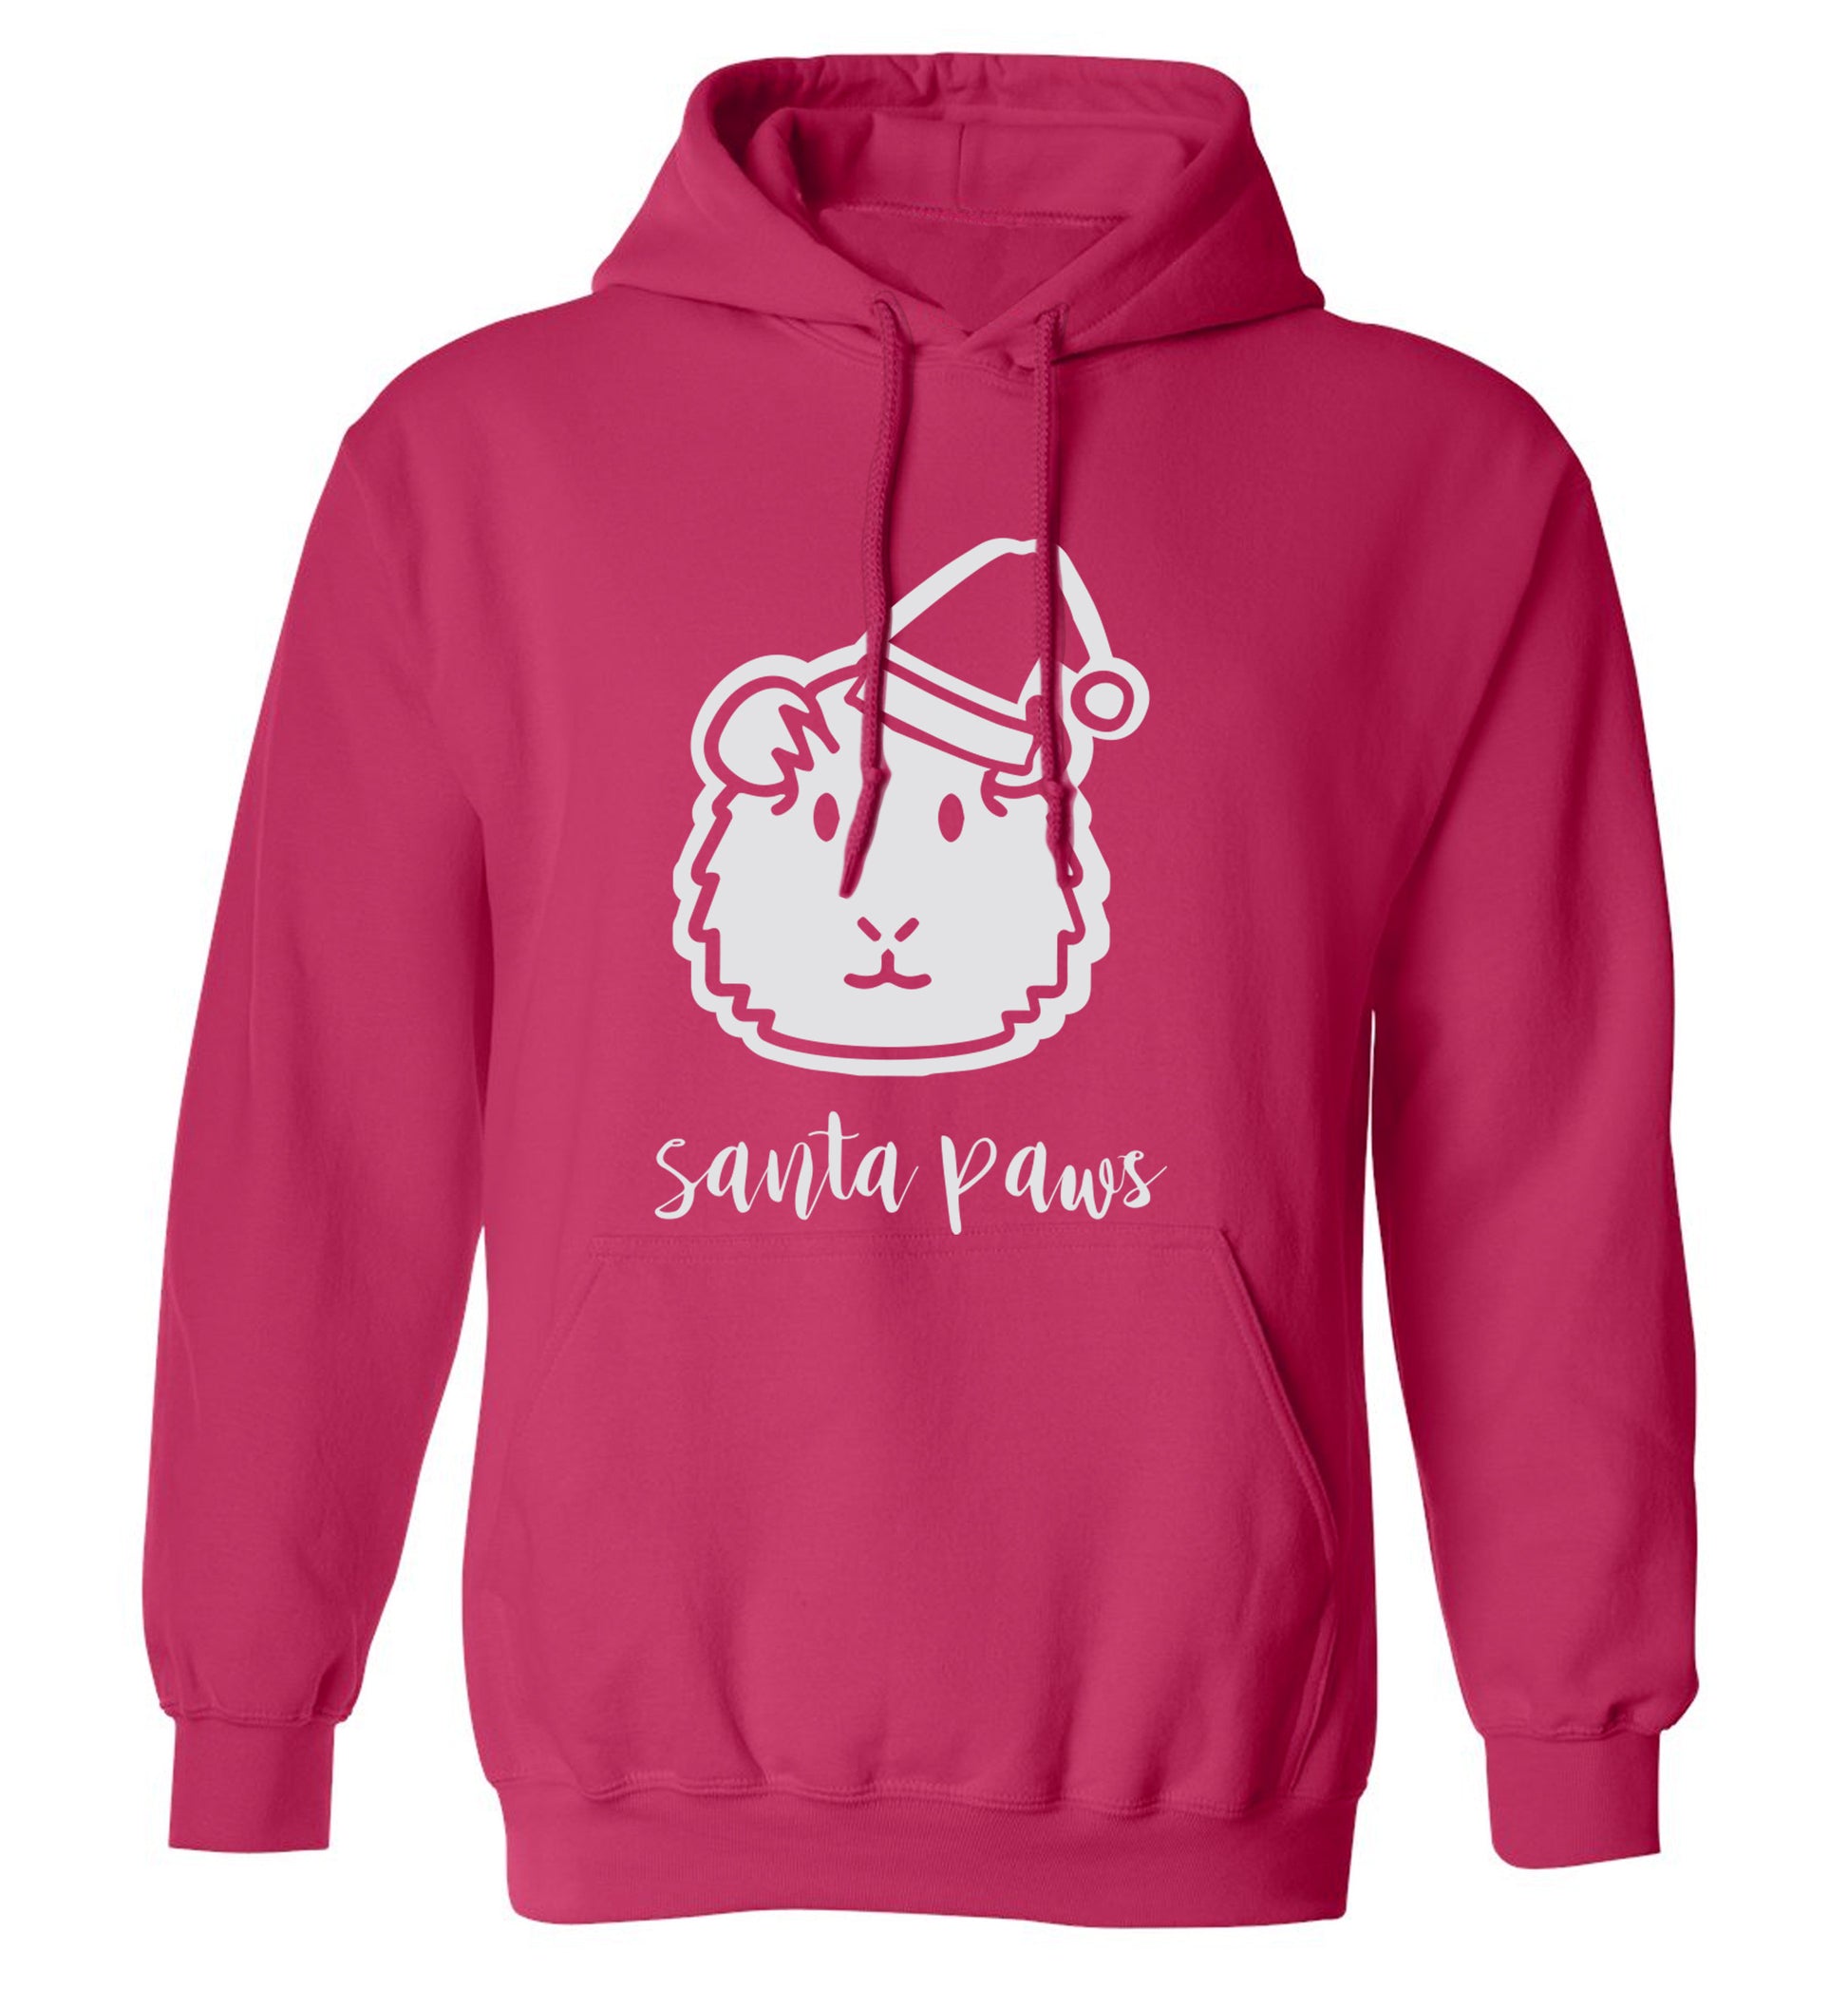 Guinea pig Santa Paws adults unisex pink hoodie 2XL